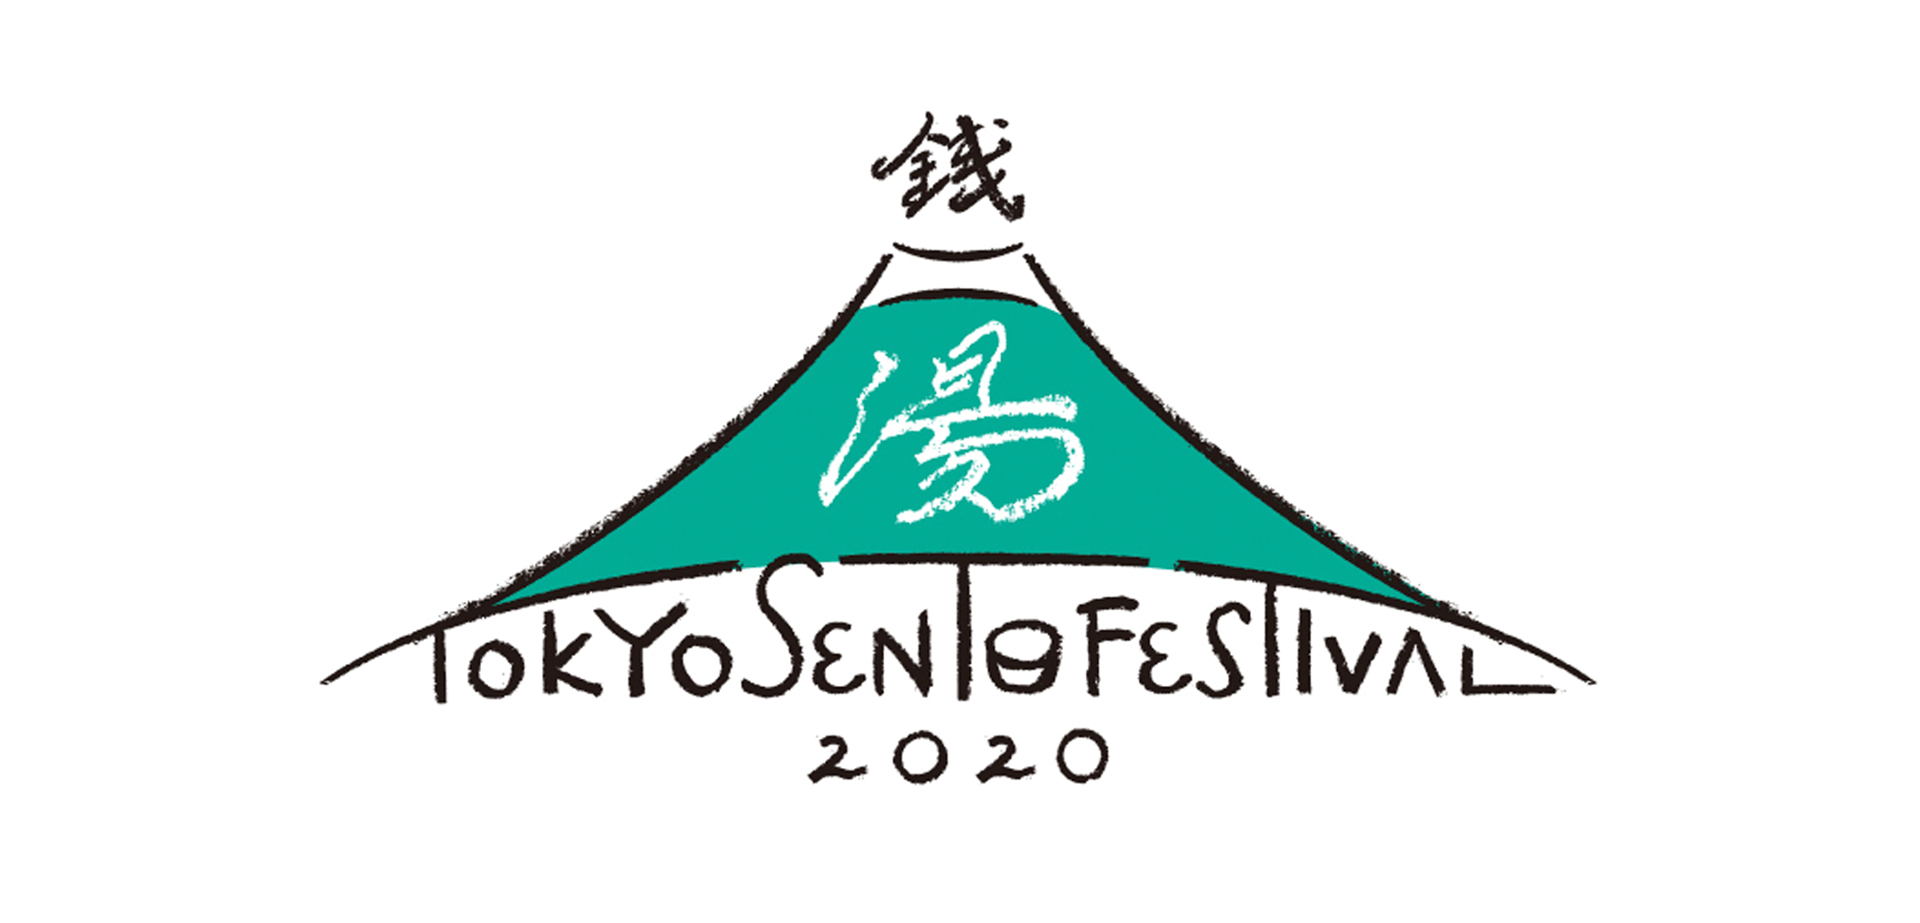 TOKYO SENTO Festival 2020